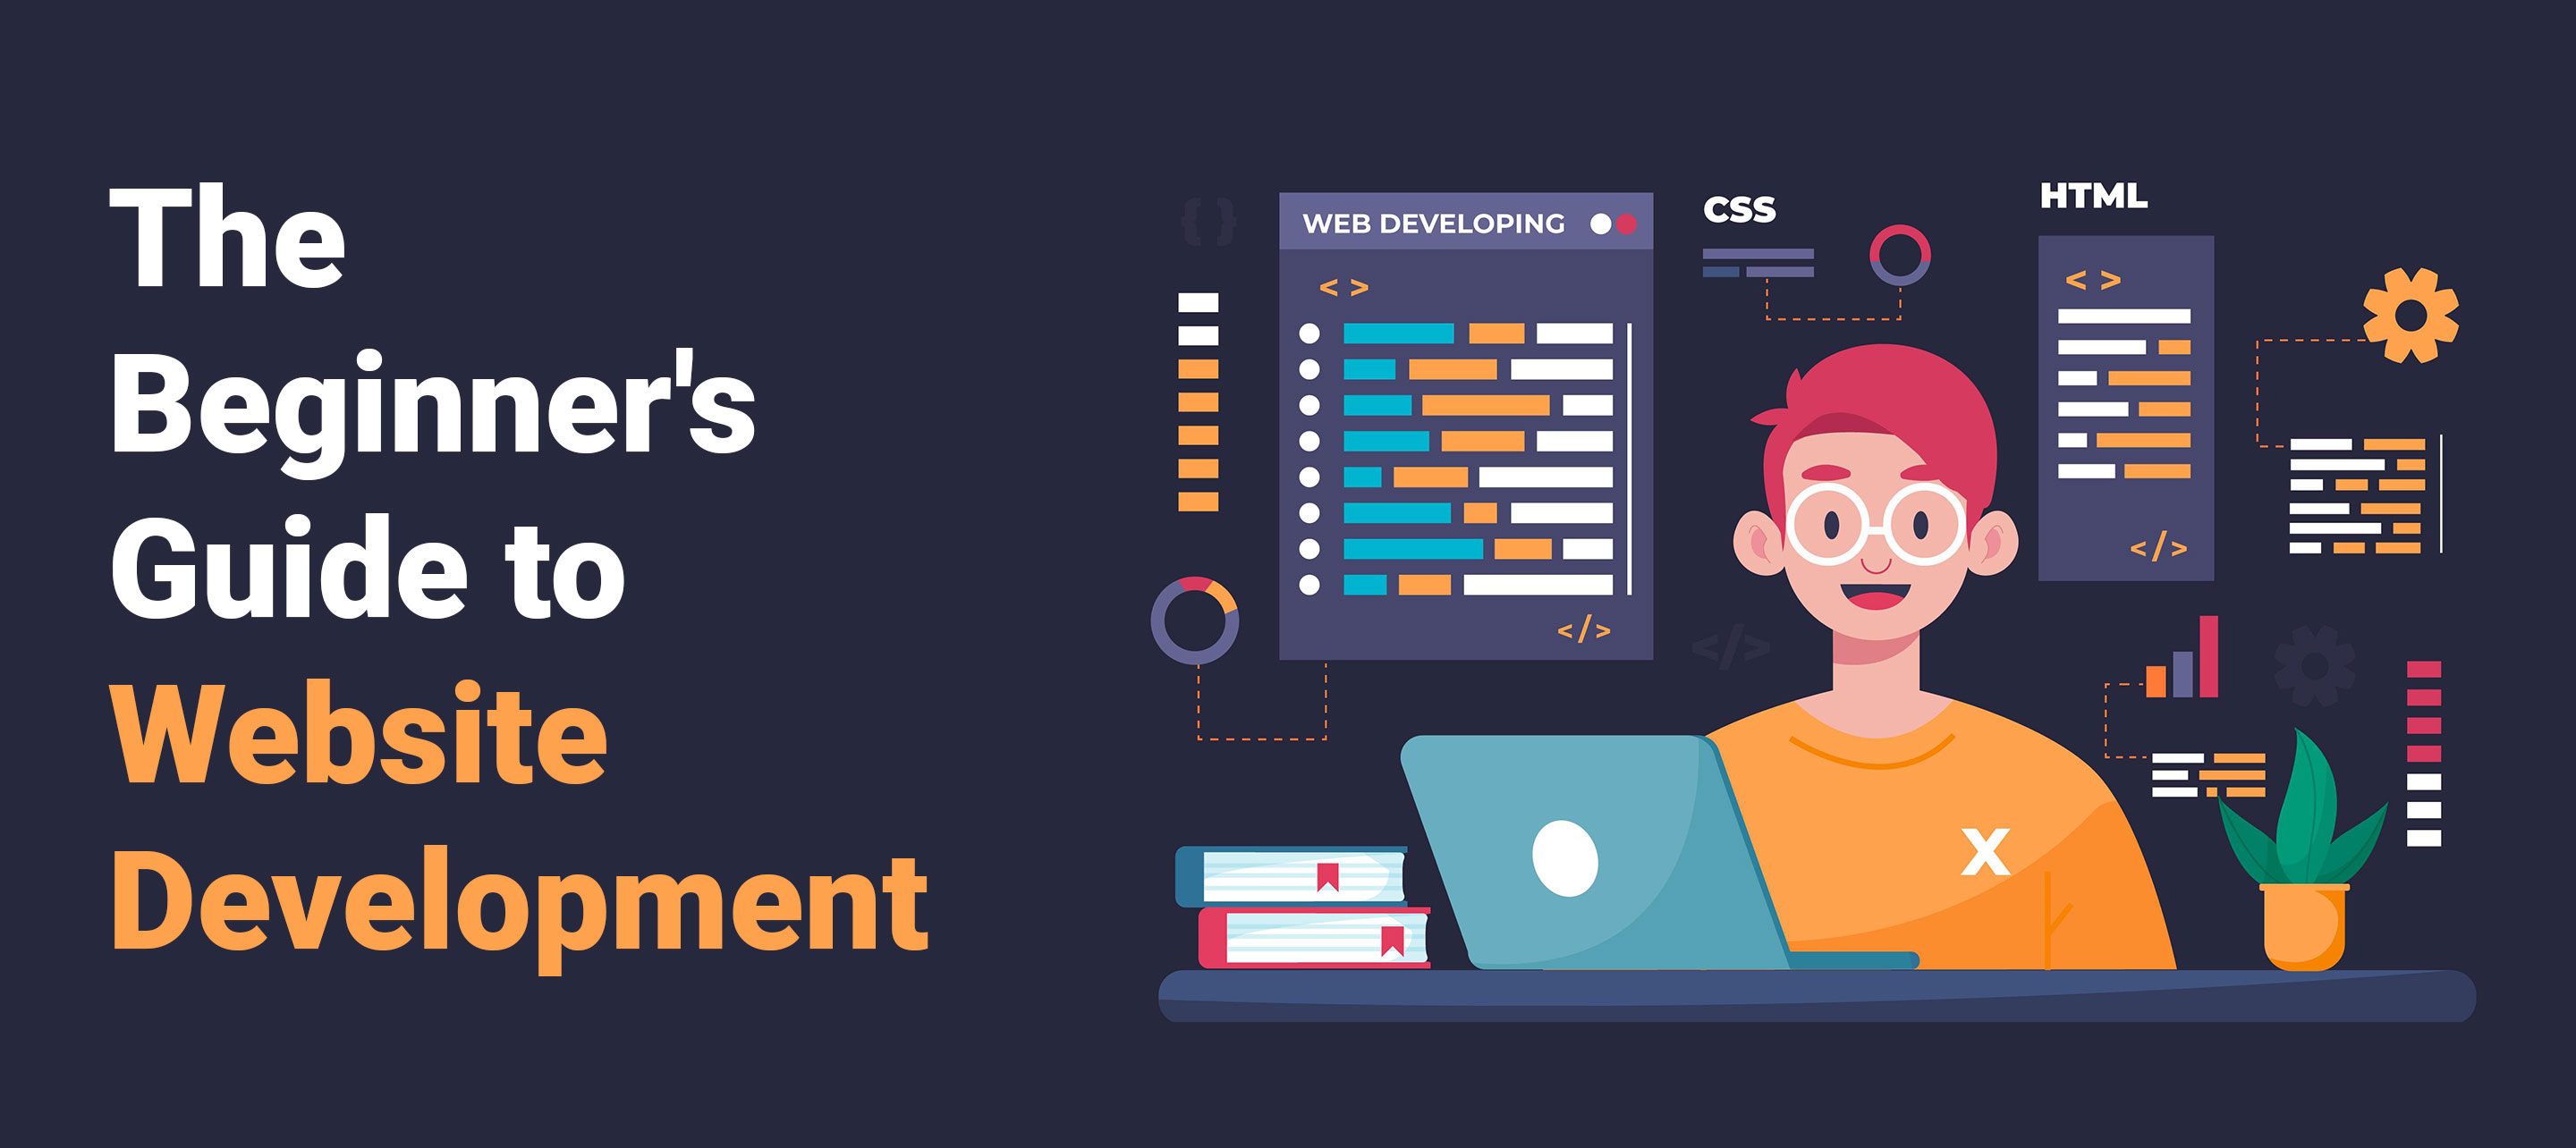 The Beginner’s Guide to Website Development